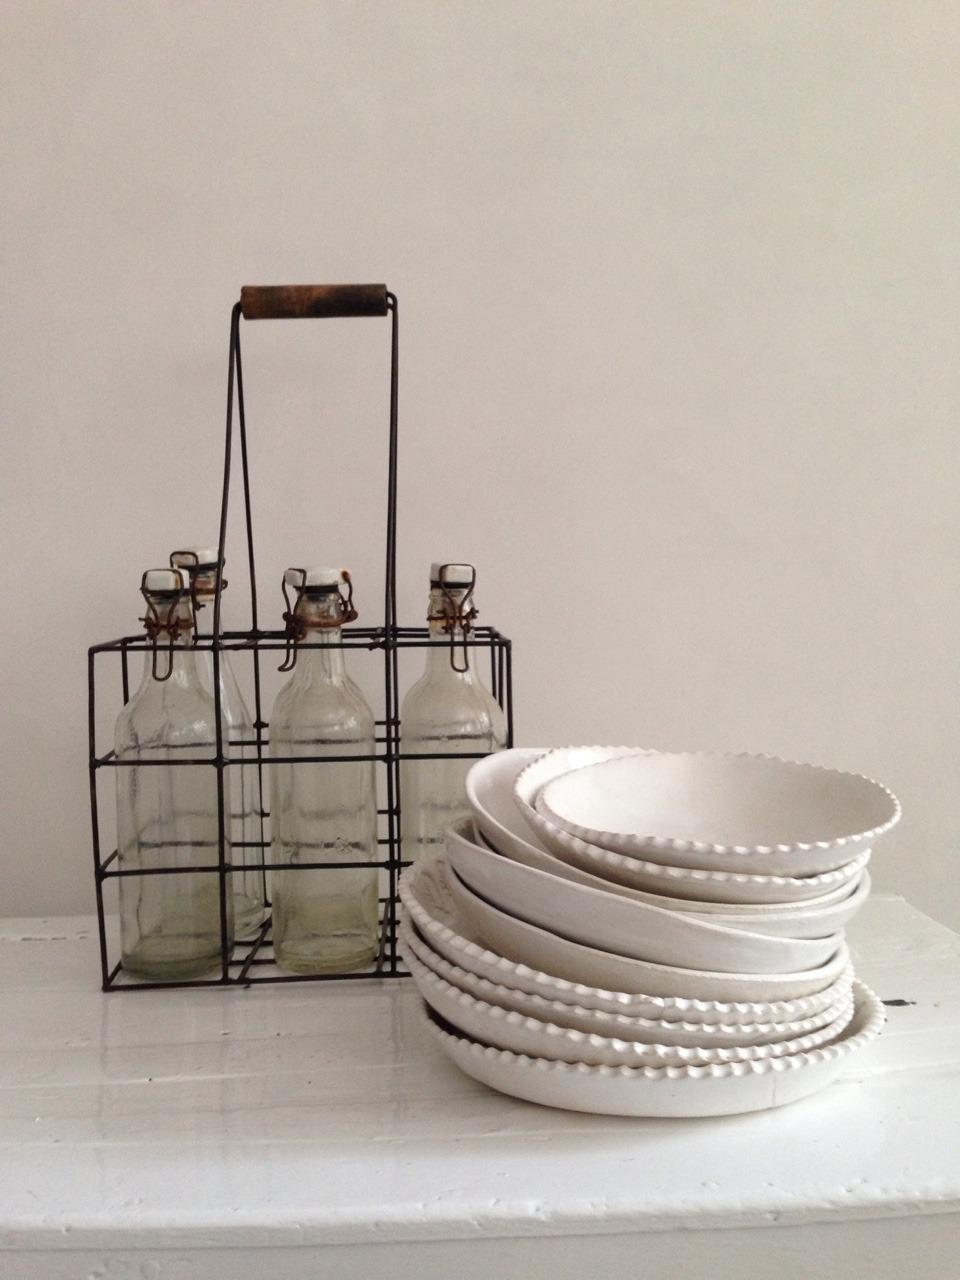 #minimal #plates #deco #kitchen #photography 